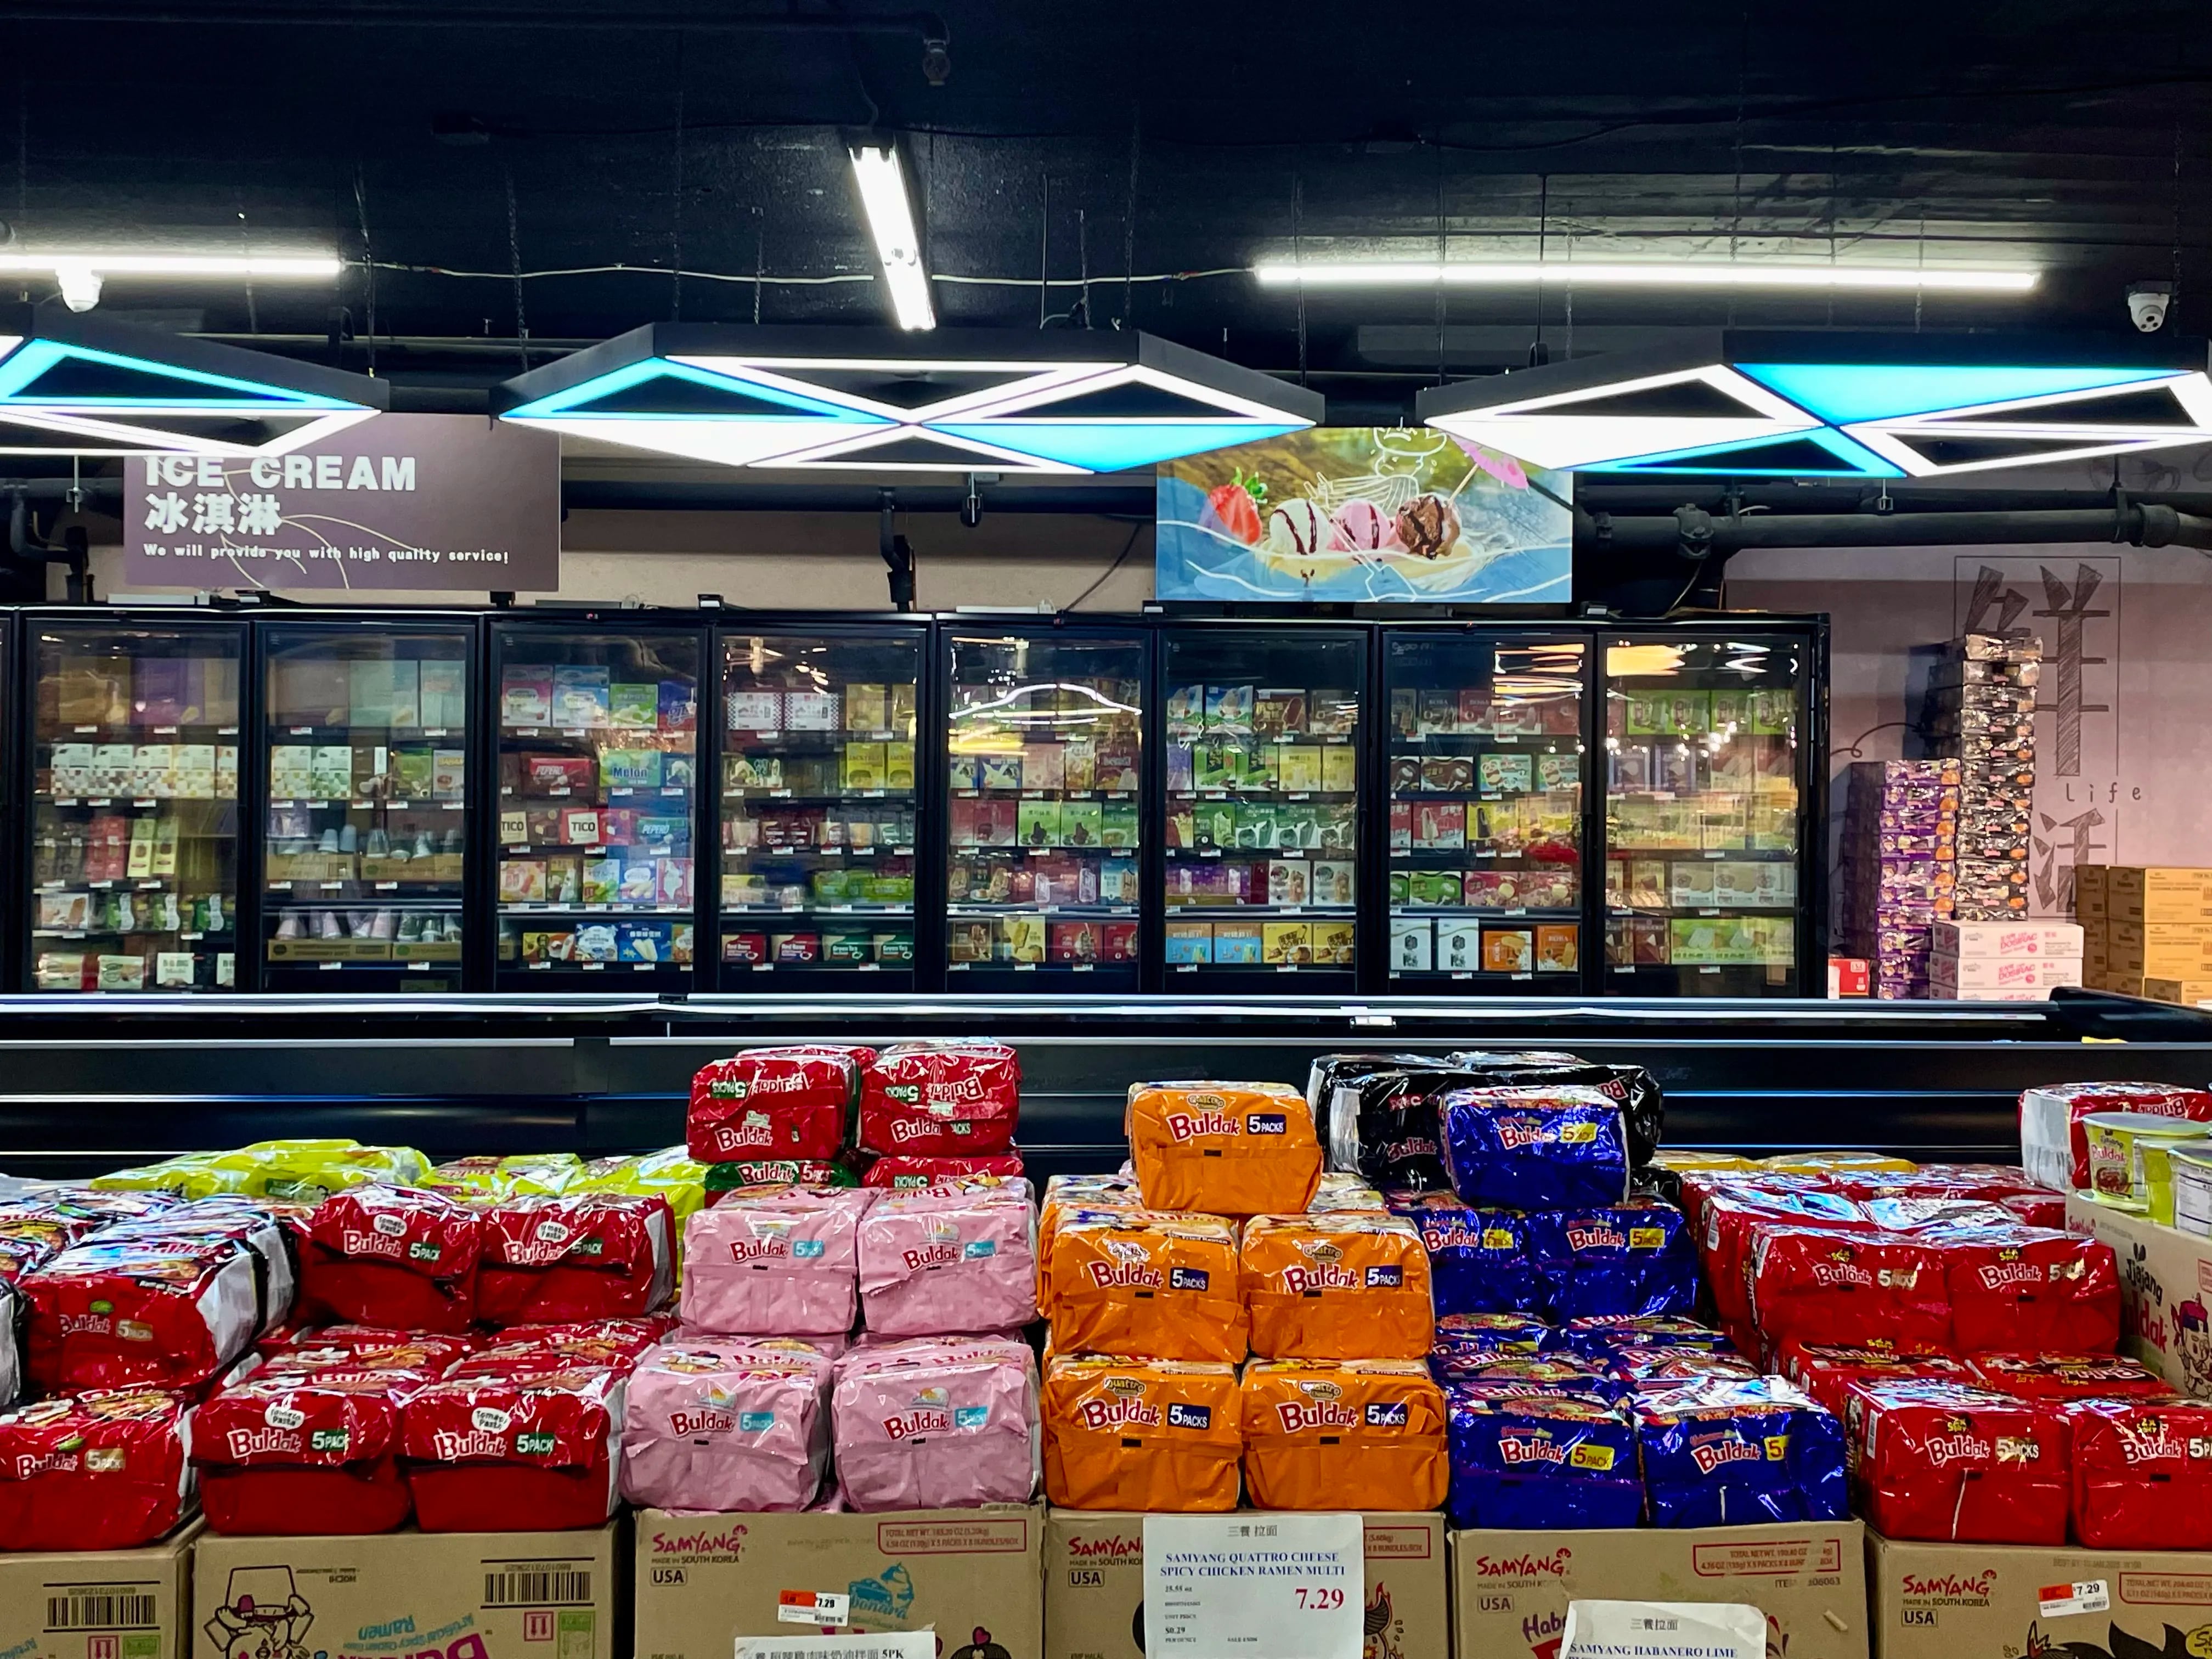 Inside the EnJoy Market, you can find plenty of ramen, frozen desserts, and snacks.